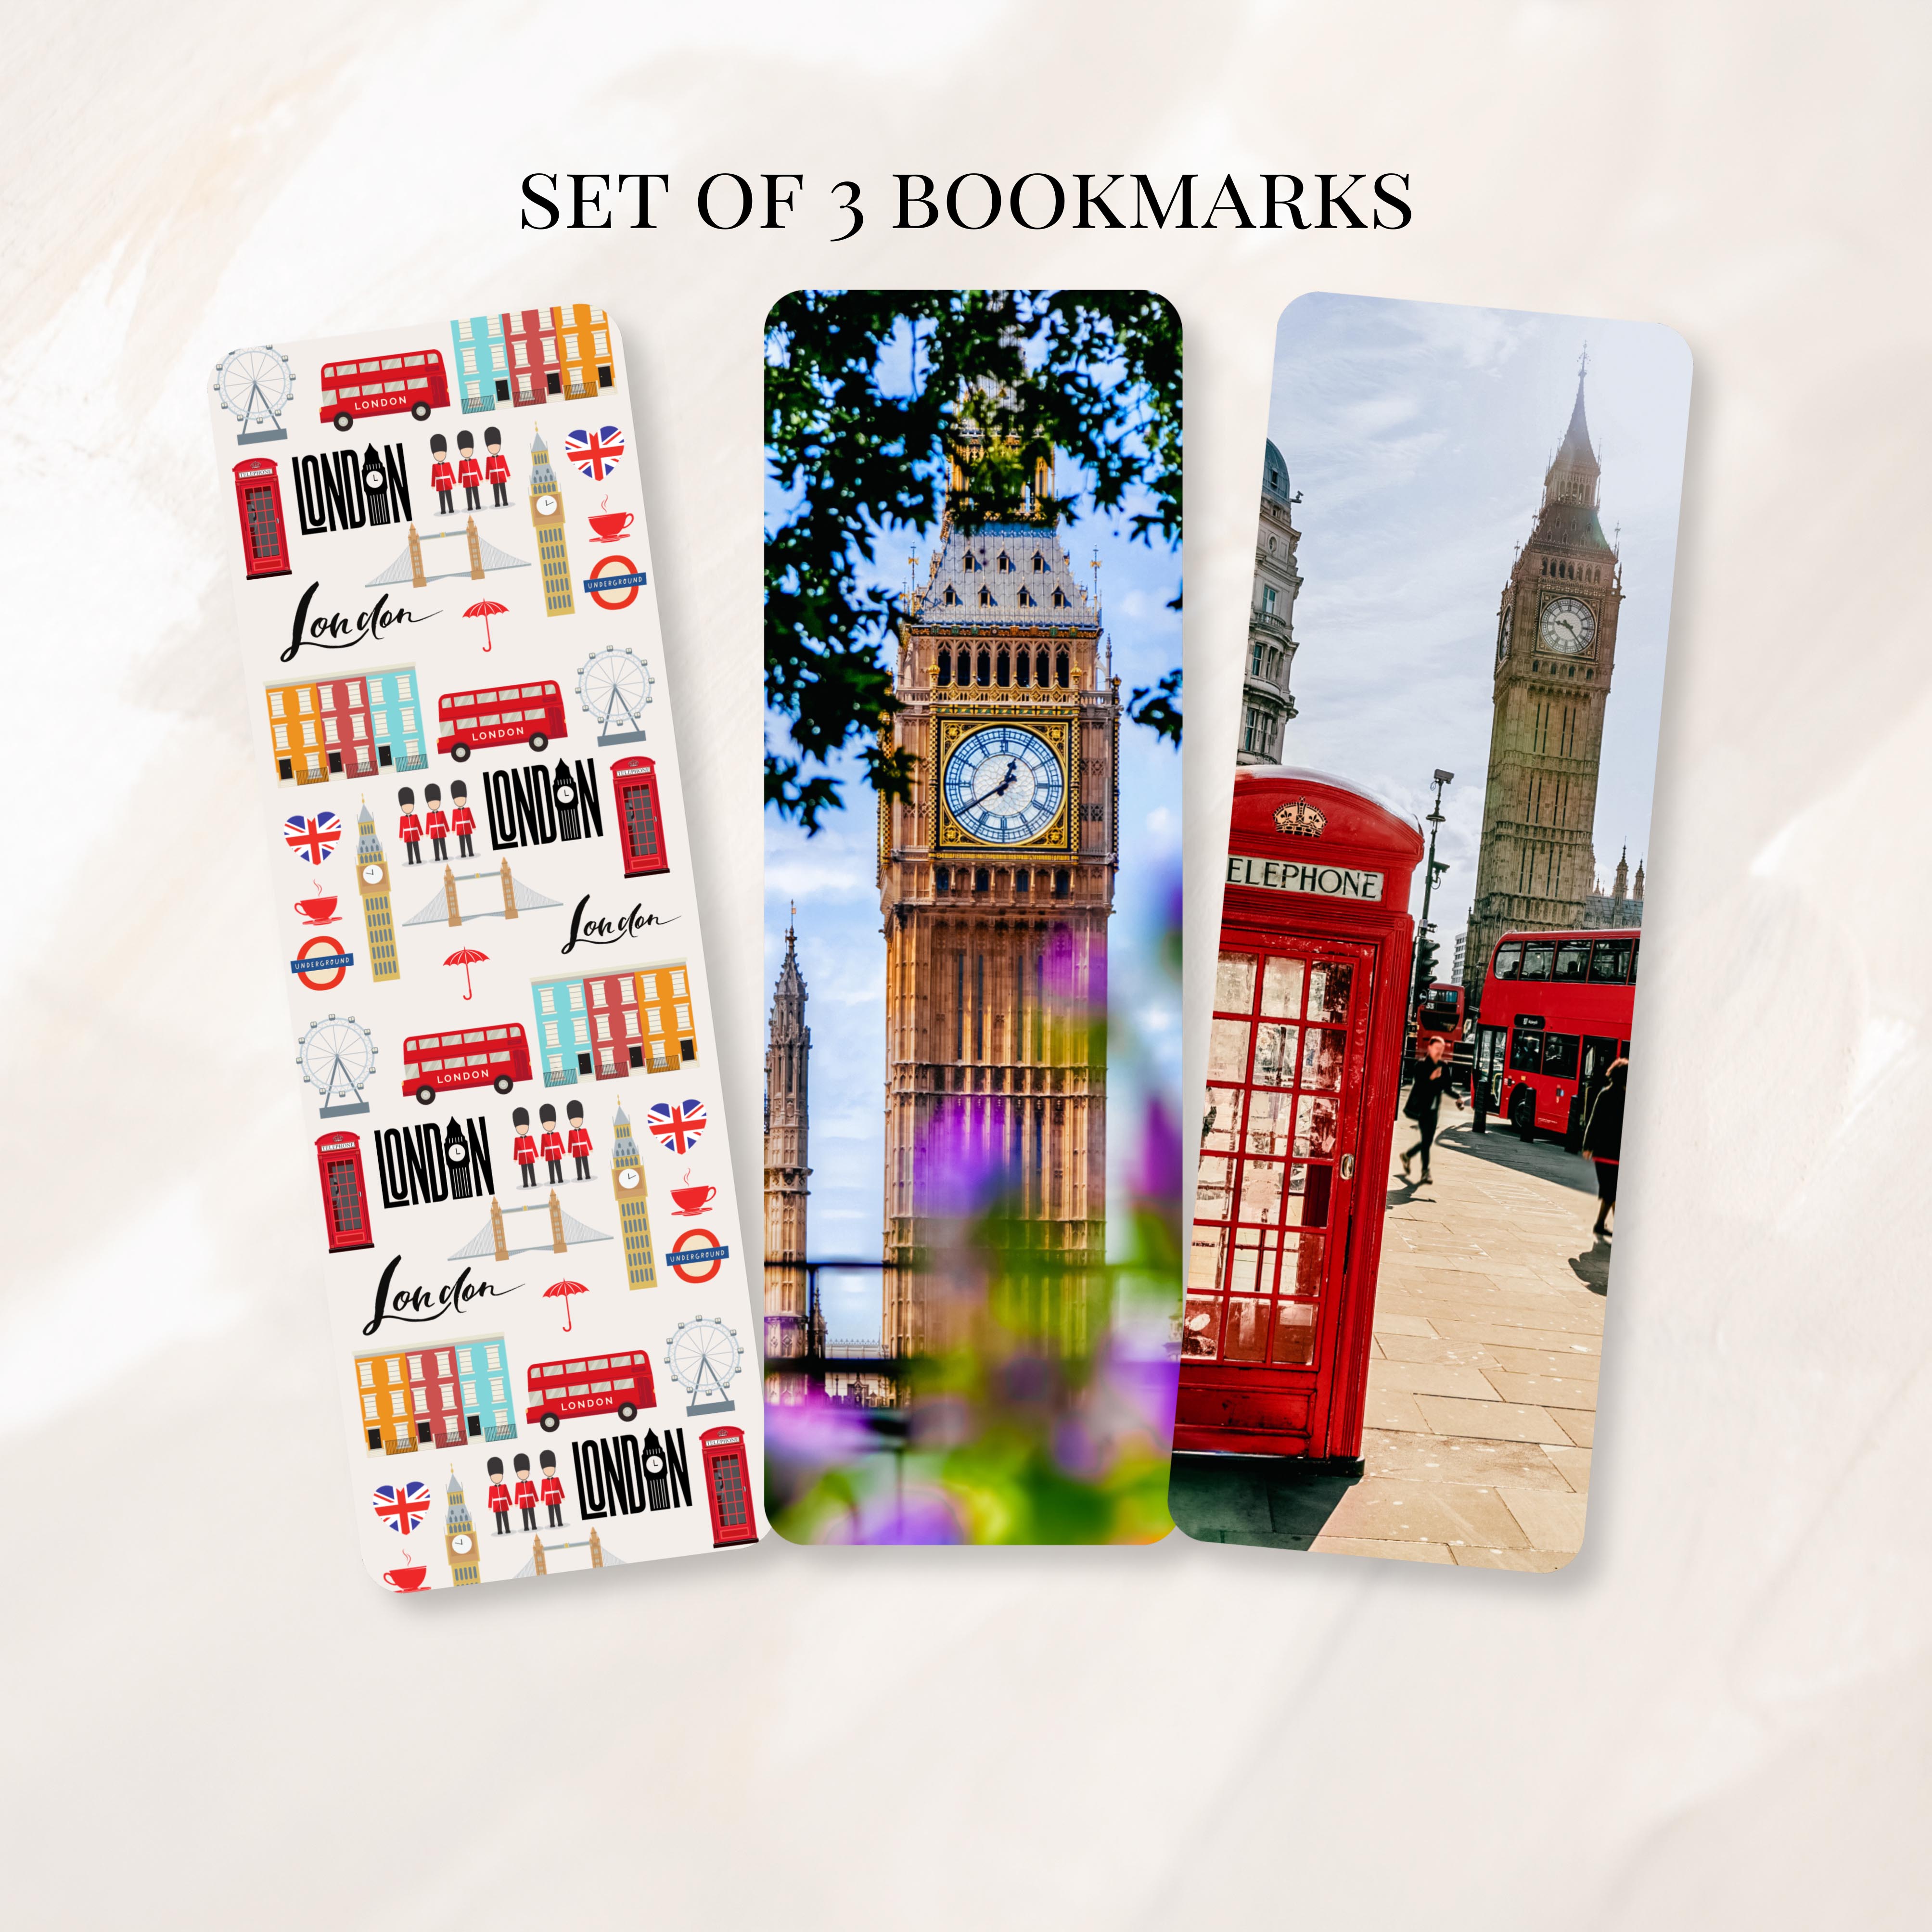 London bookmarks